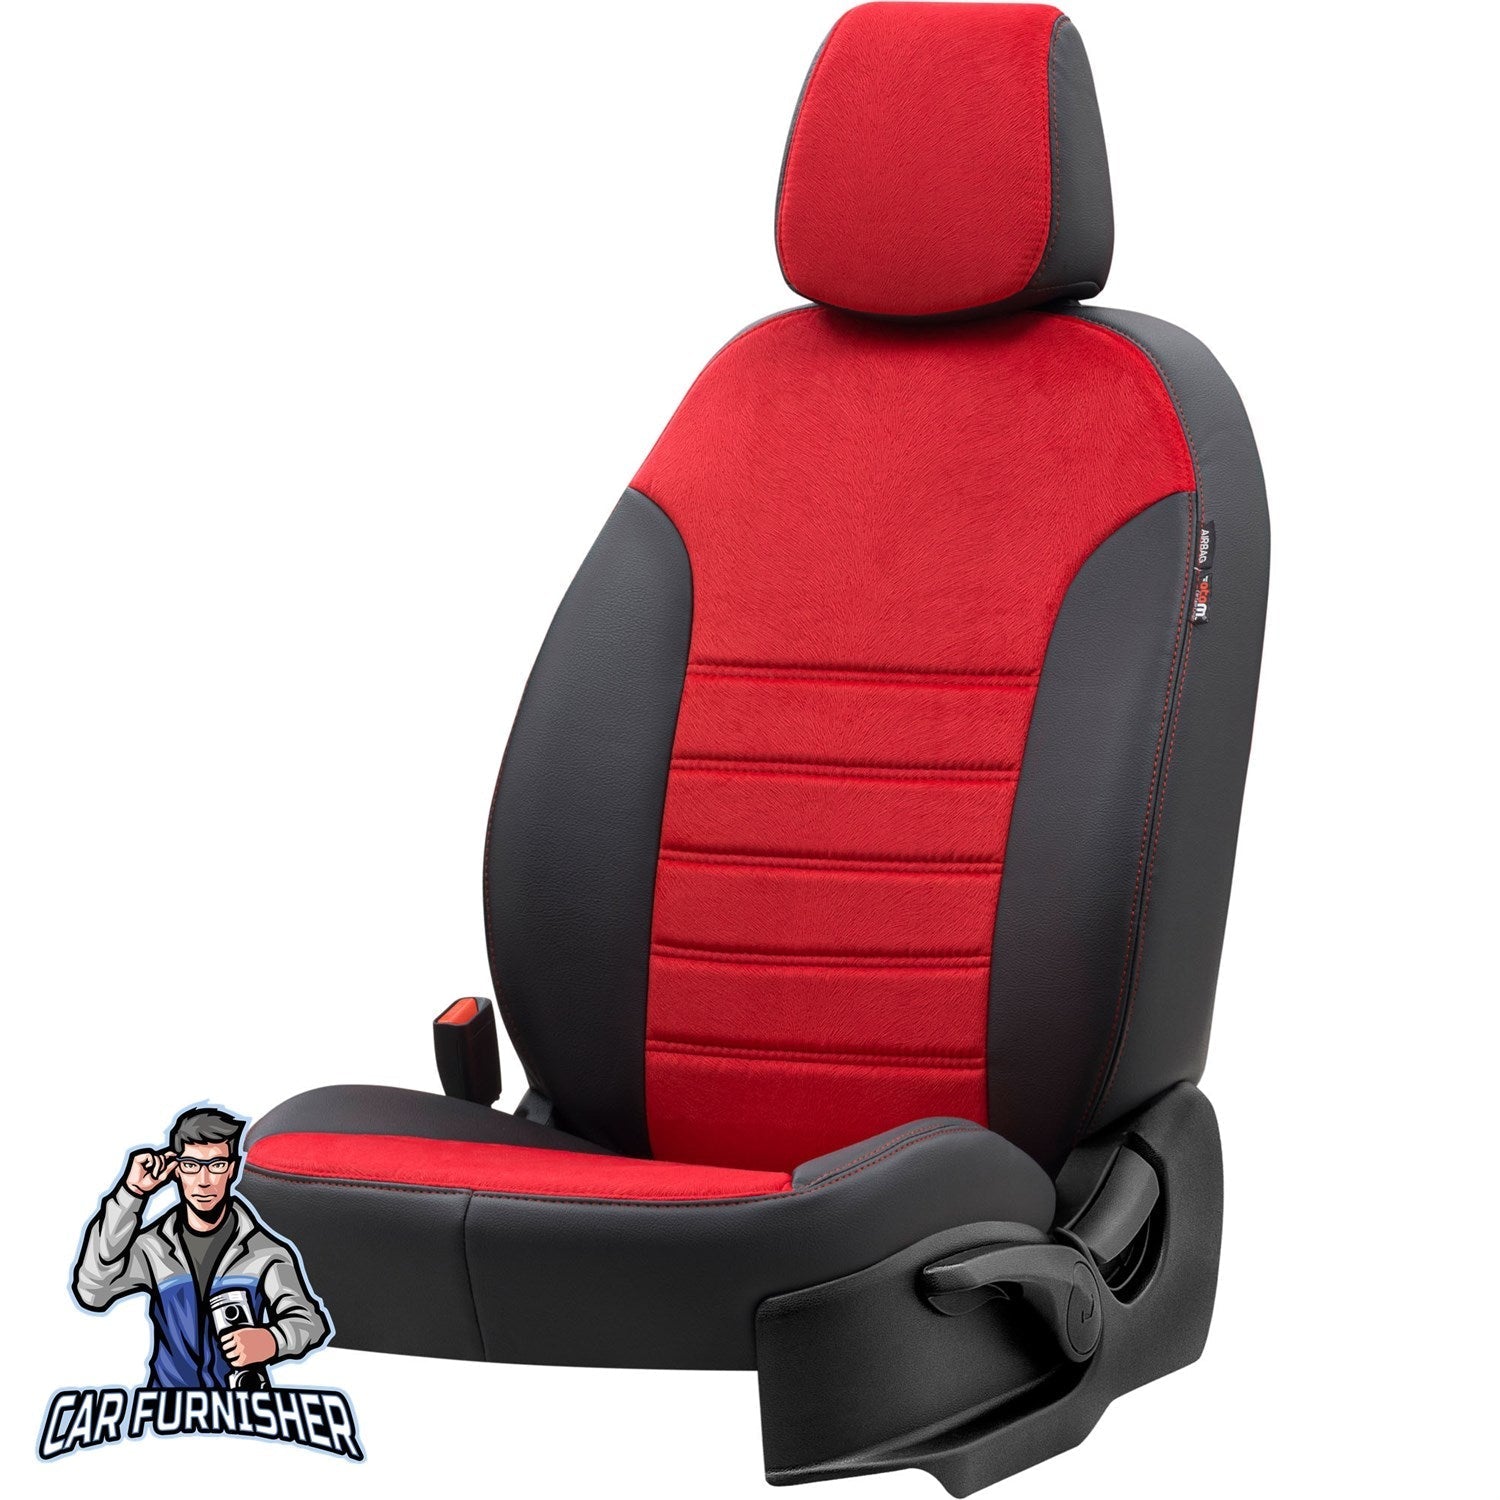 Chery Tiggo Car Seat Covers 2008-2011 London Design Red Full Set (5 Seats + Handrest) Leather & Fabric